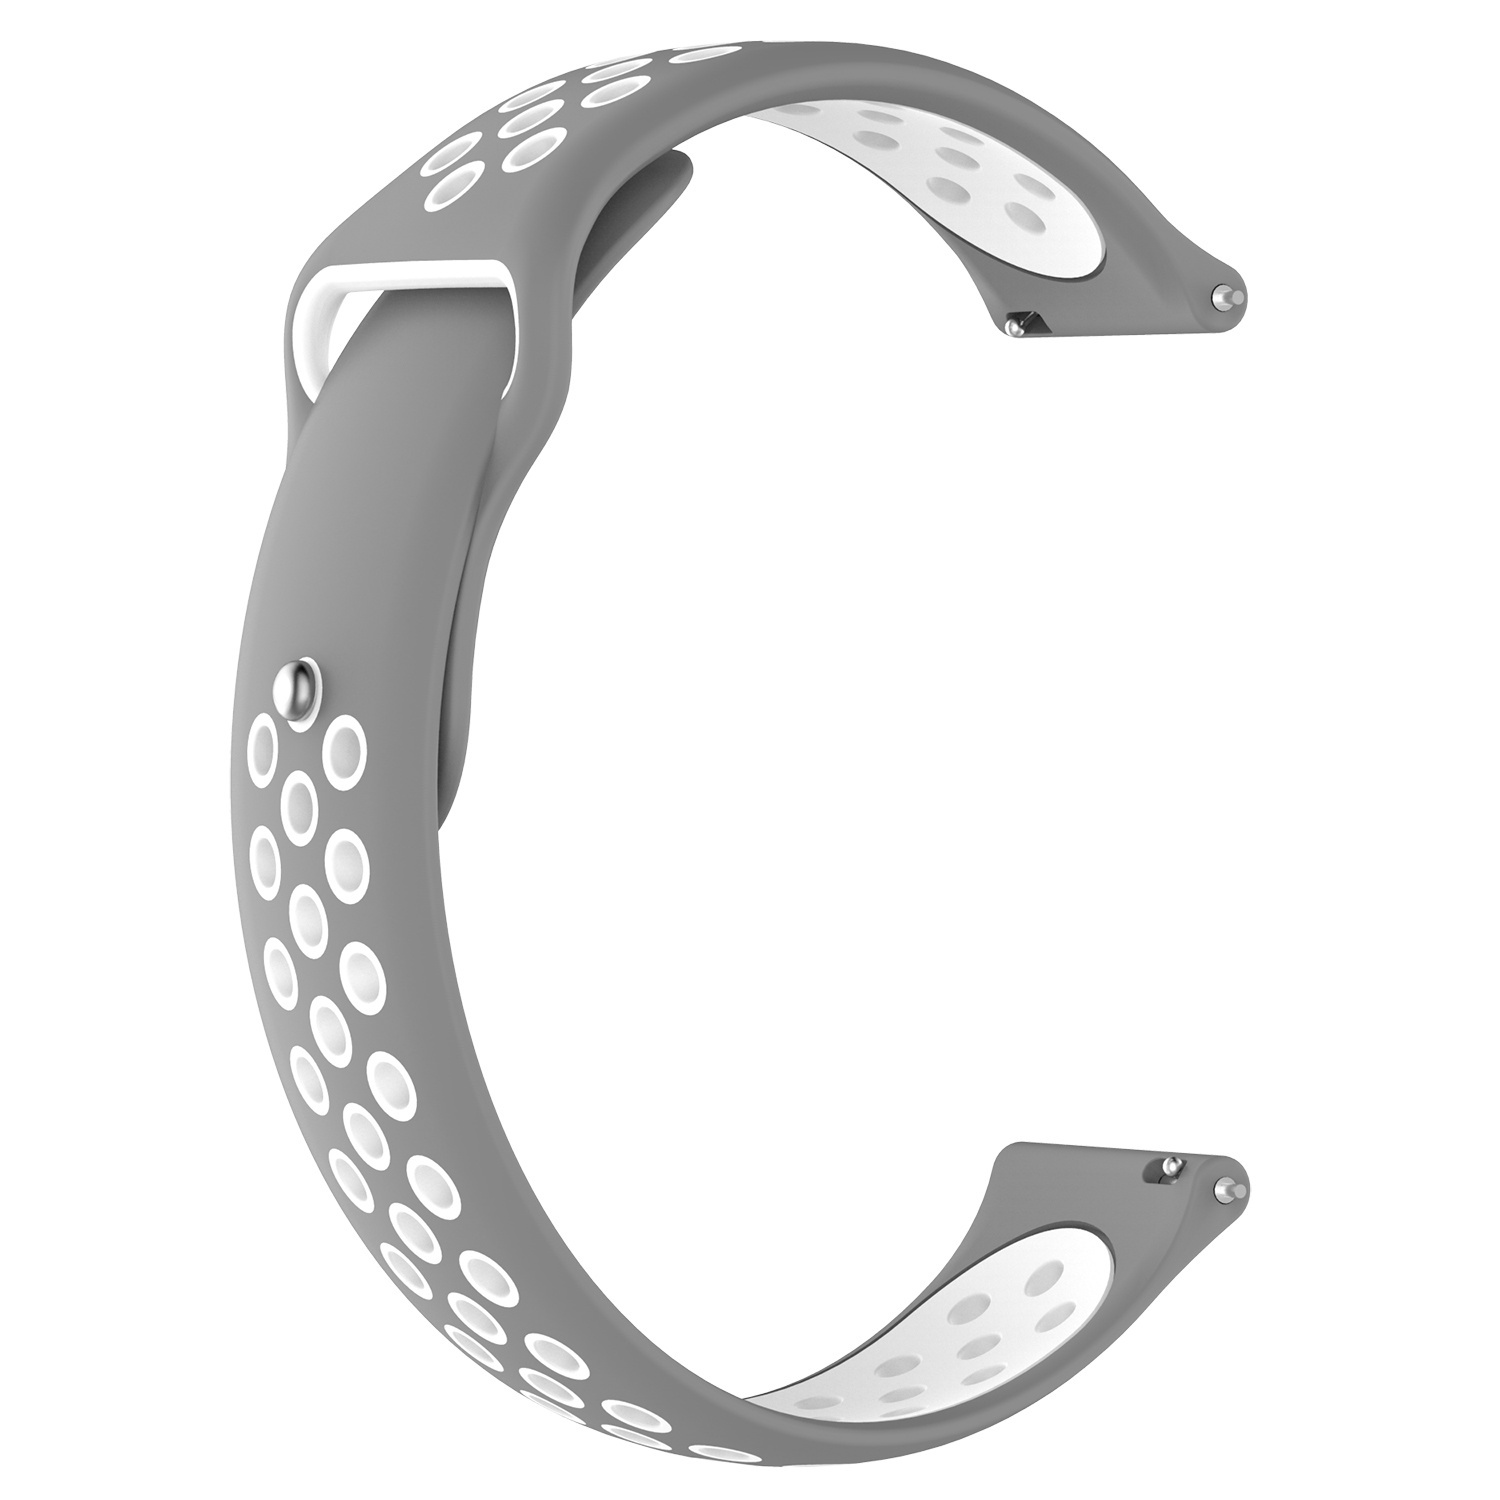 Cinturino doppio sport per Samsung Galaxy Watch - grigio bianco